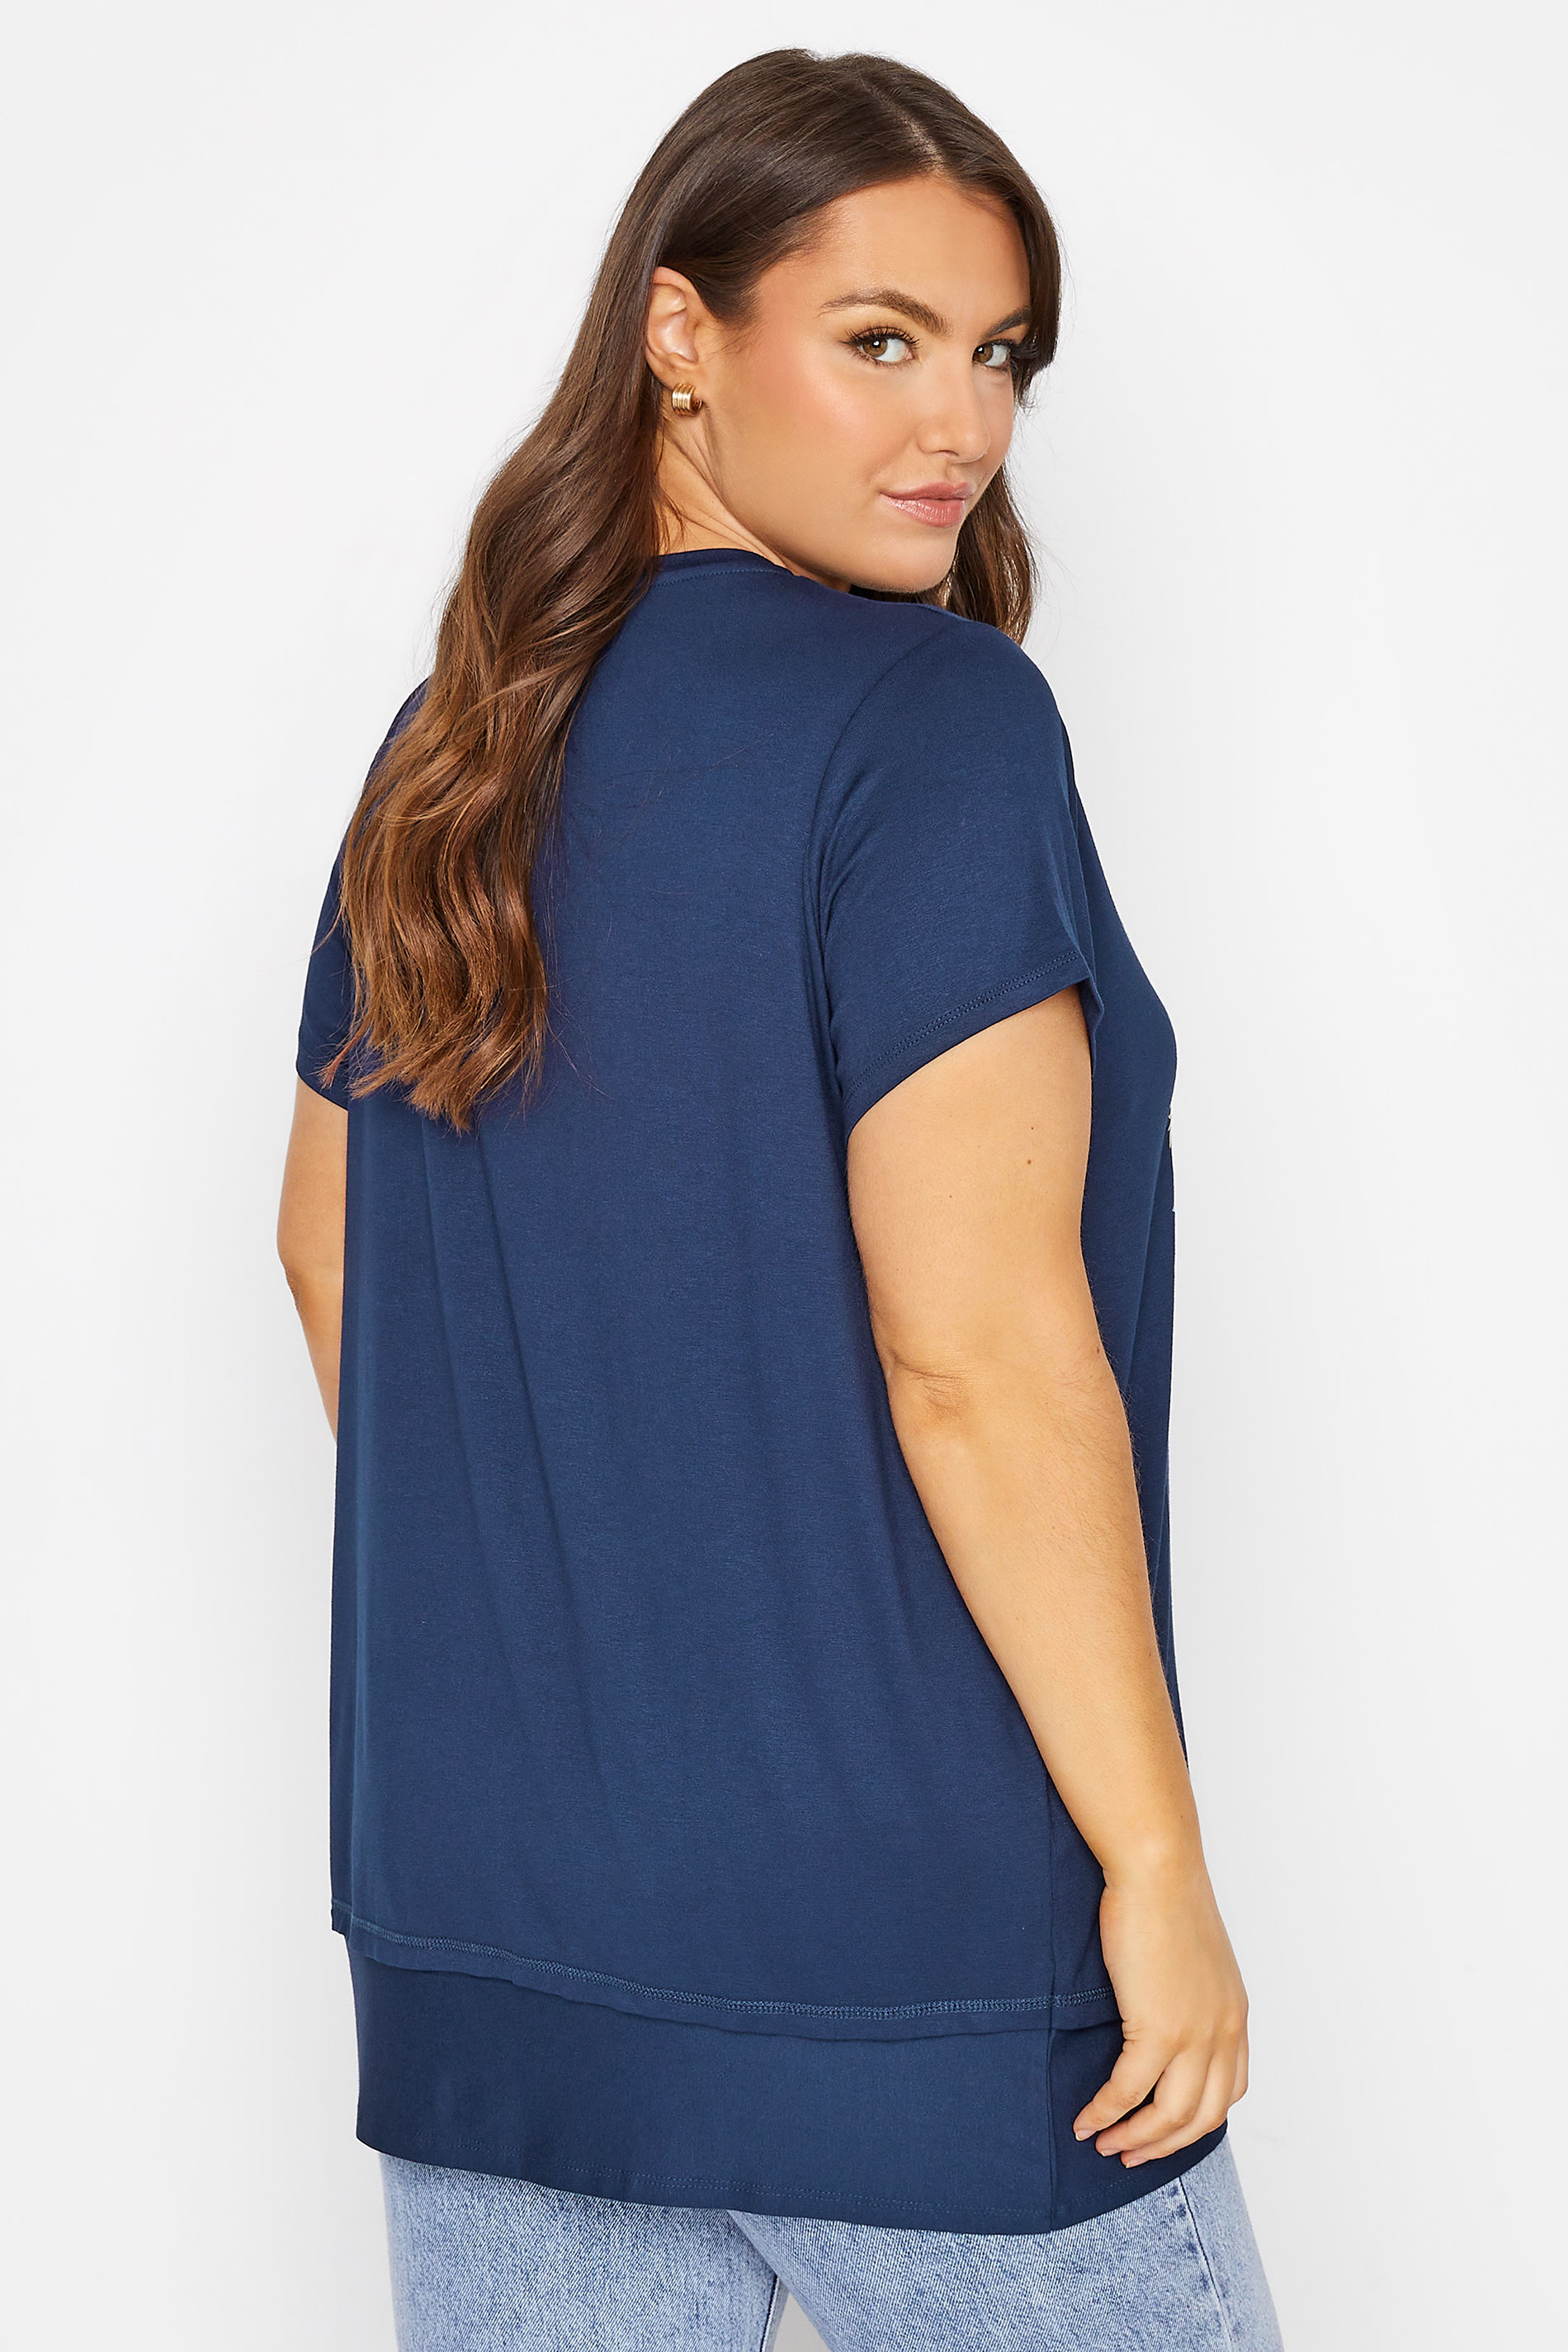 Grande taille  Tops Grande taille  T-Shirts | T-Shirt Bleu Marine en Jersey Graphique Tigre - UQ66952